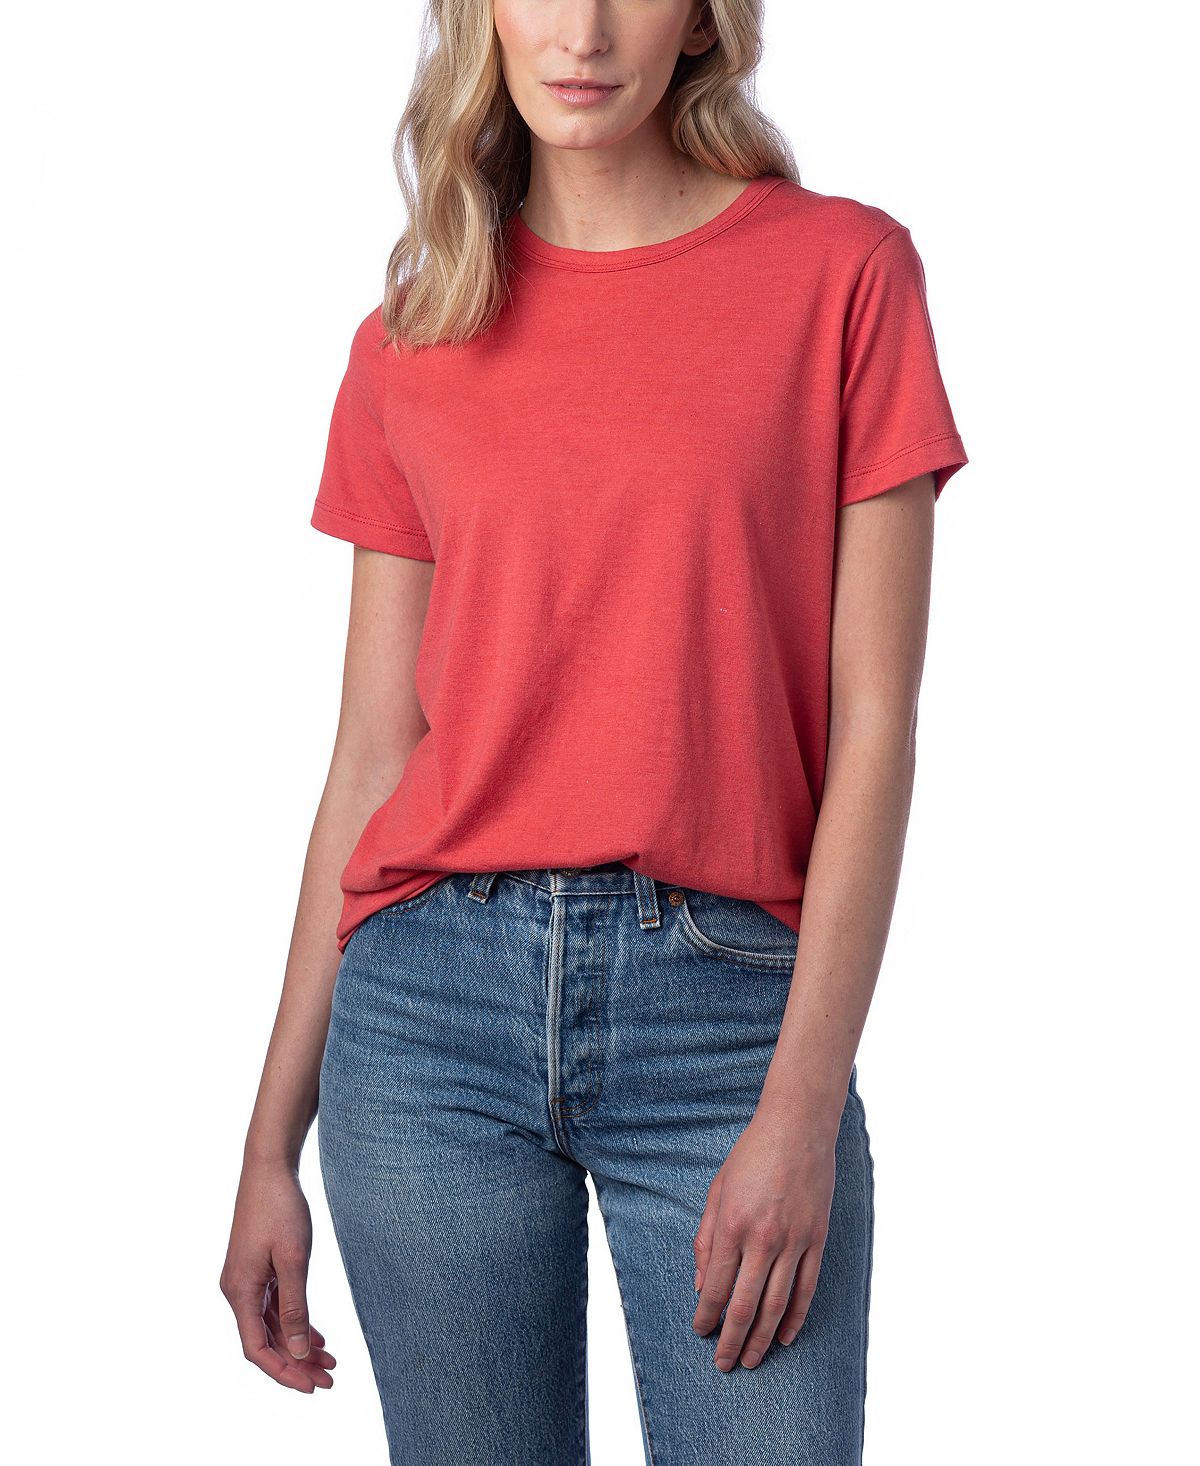 цена Женская футболка Tri-Blend Crew из модала Macy's